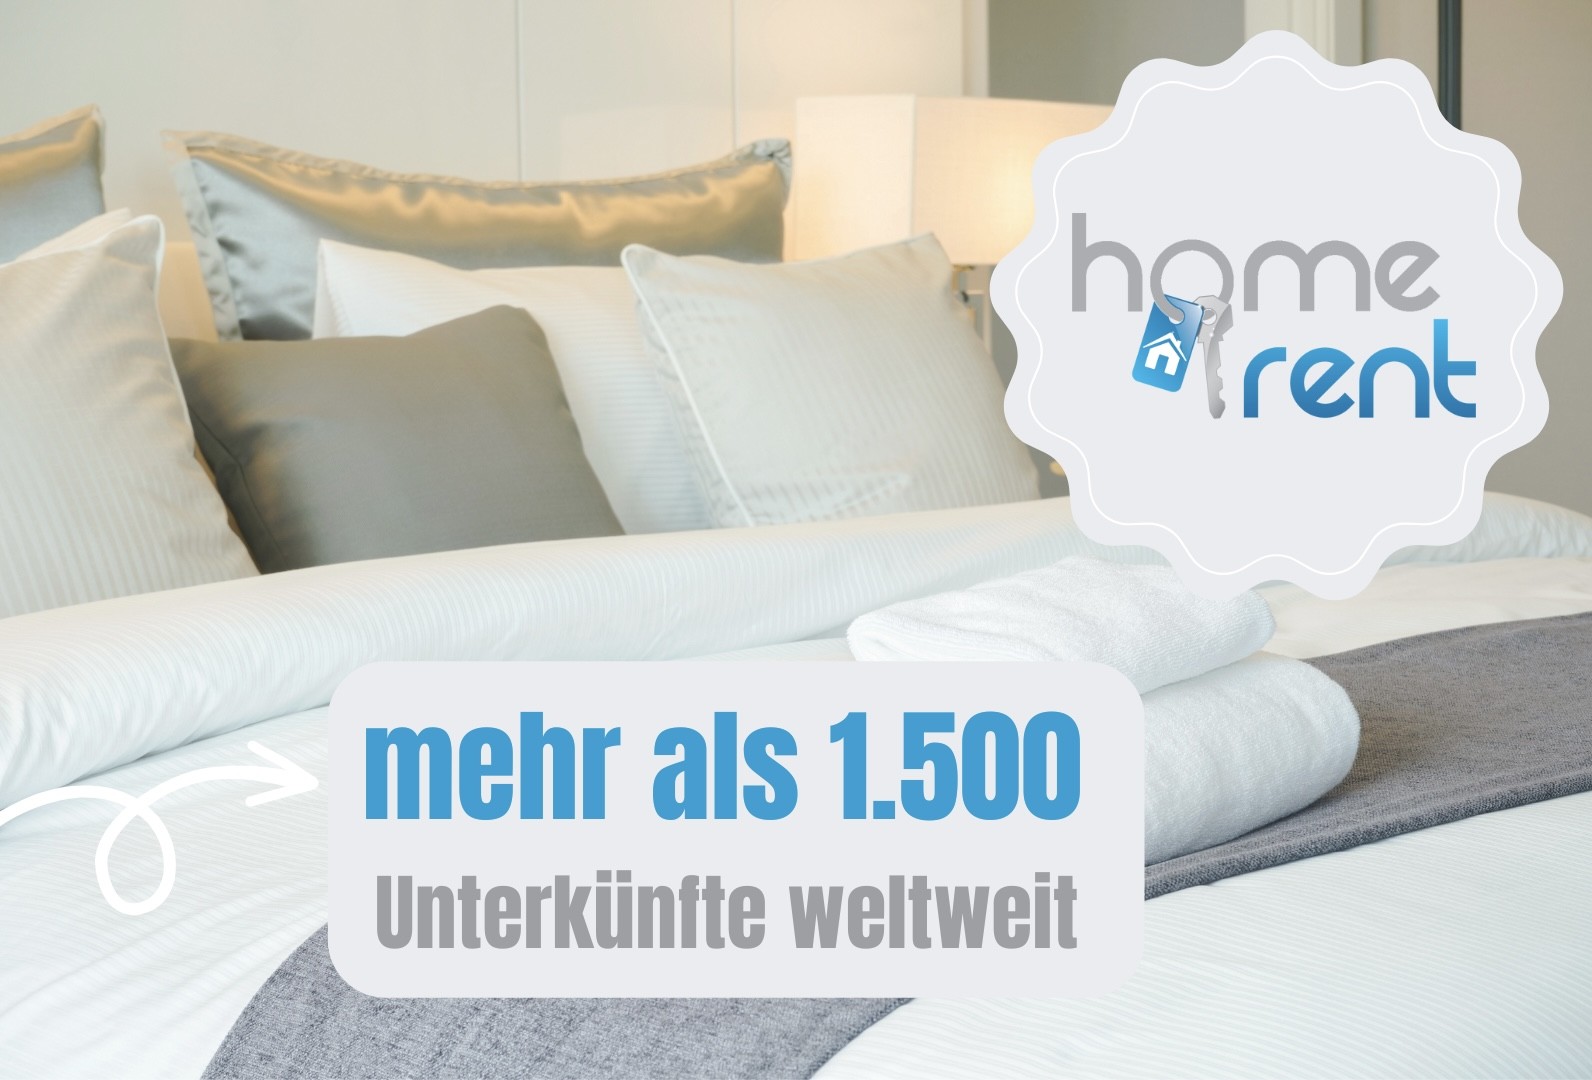 Monteurwohnung Ferienwohnungen Homerent Köln Homerent Immobilien GmbH 50672 169139267664d09aa463a91